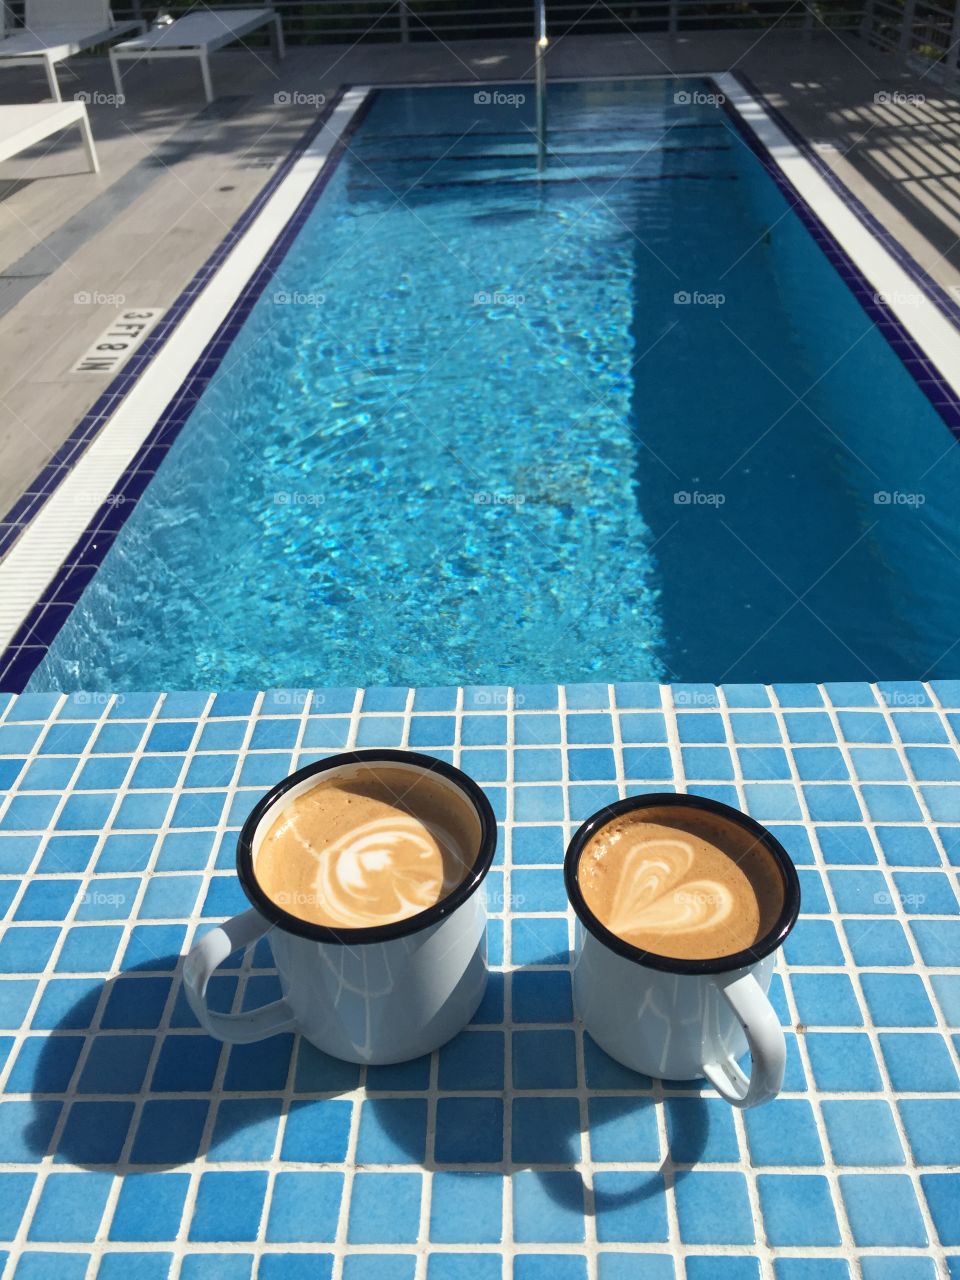 Coffee mug on swimming pool